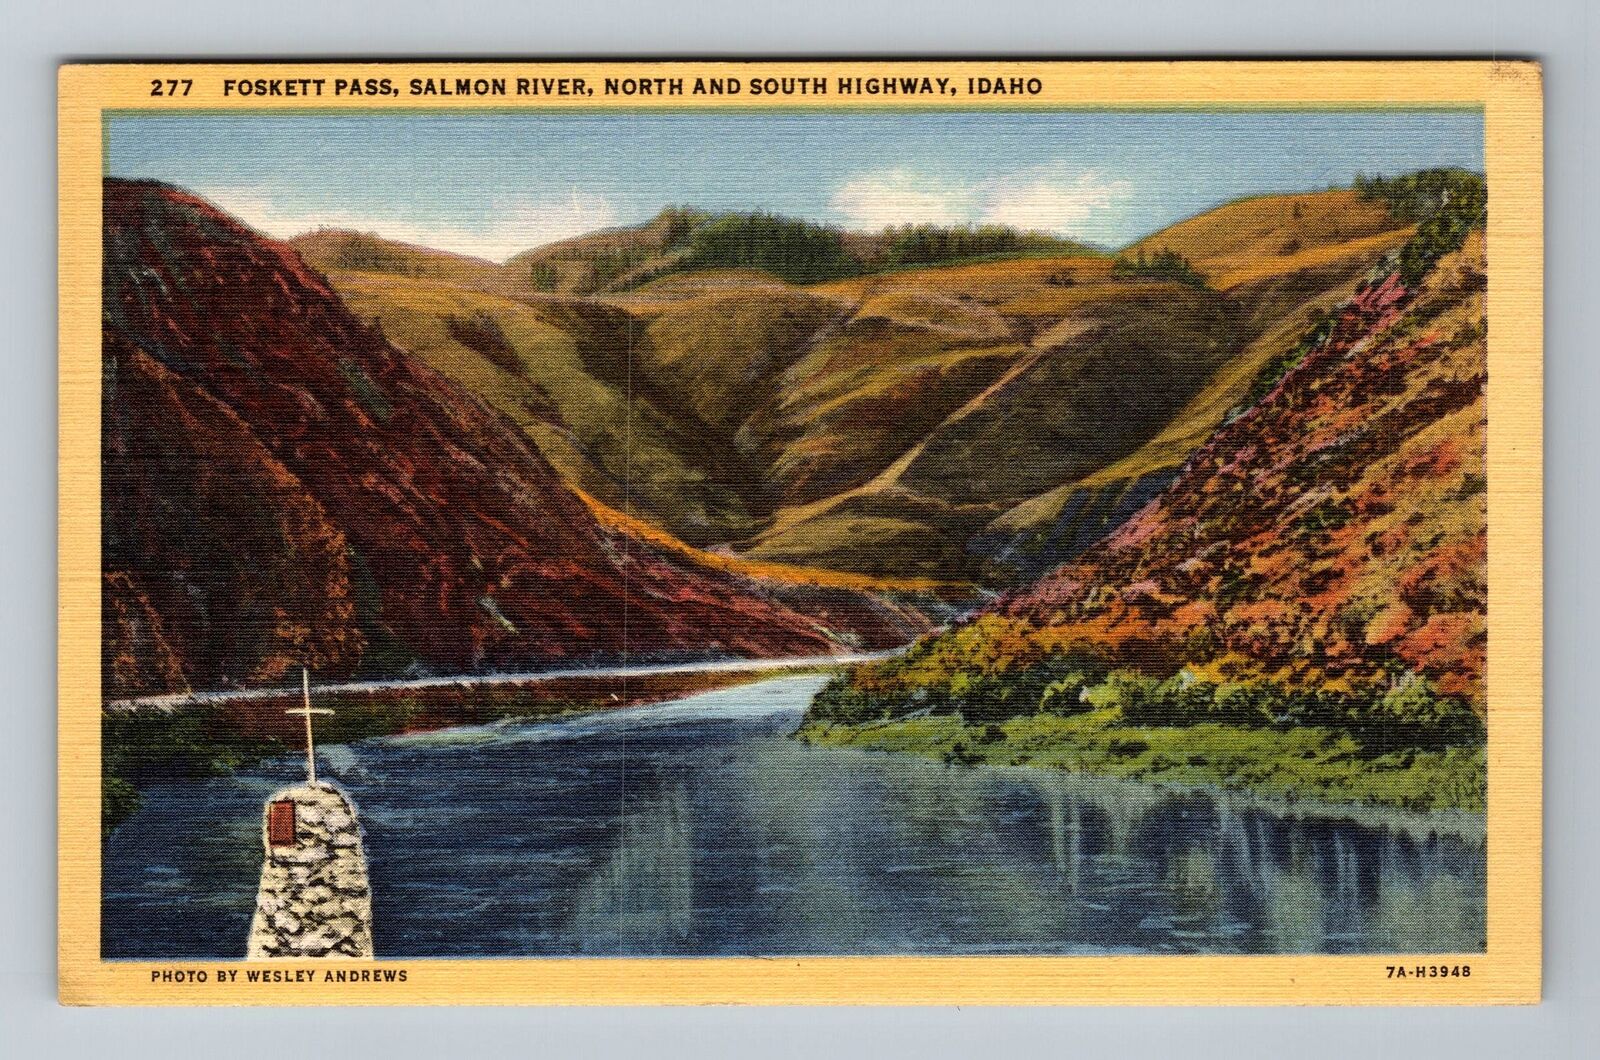 ID-Idaho, Foskett Pass, Salmon River, Highway, Vintage Postcard